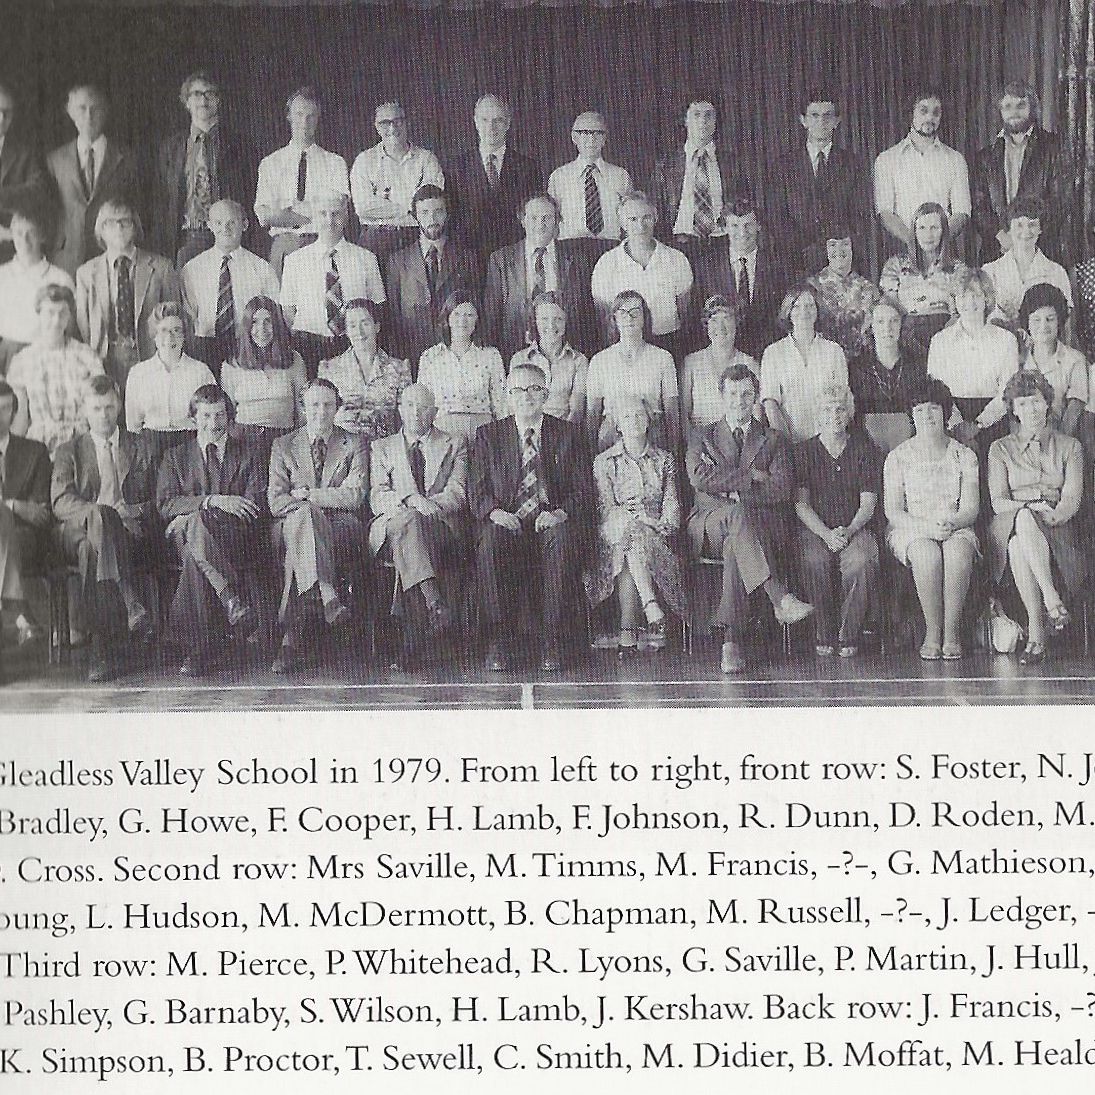 Gleadless Valley School Staff 1979